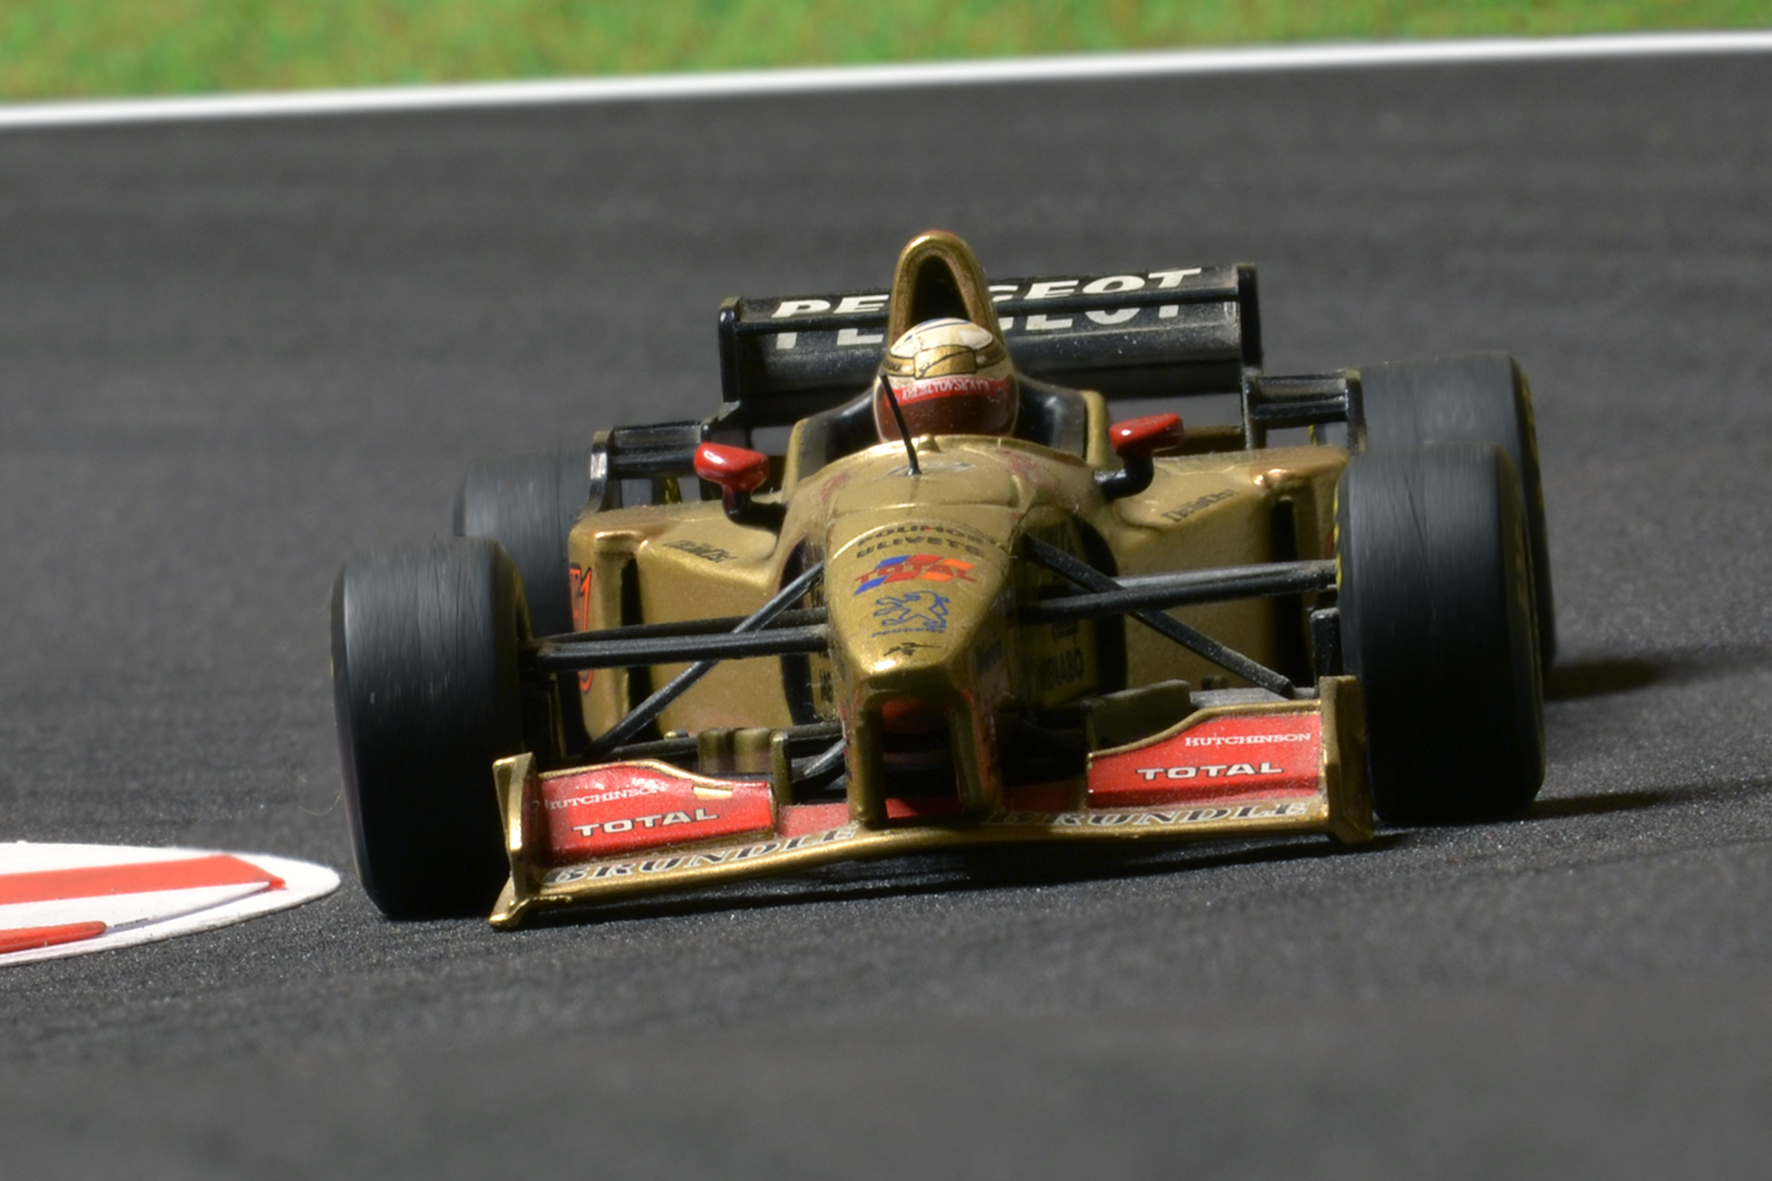 Jordan 196 Martin Brundle 1996 - Minichamps 1:43